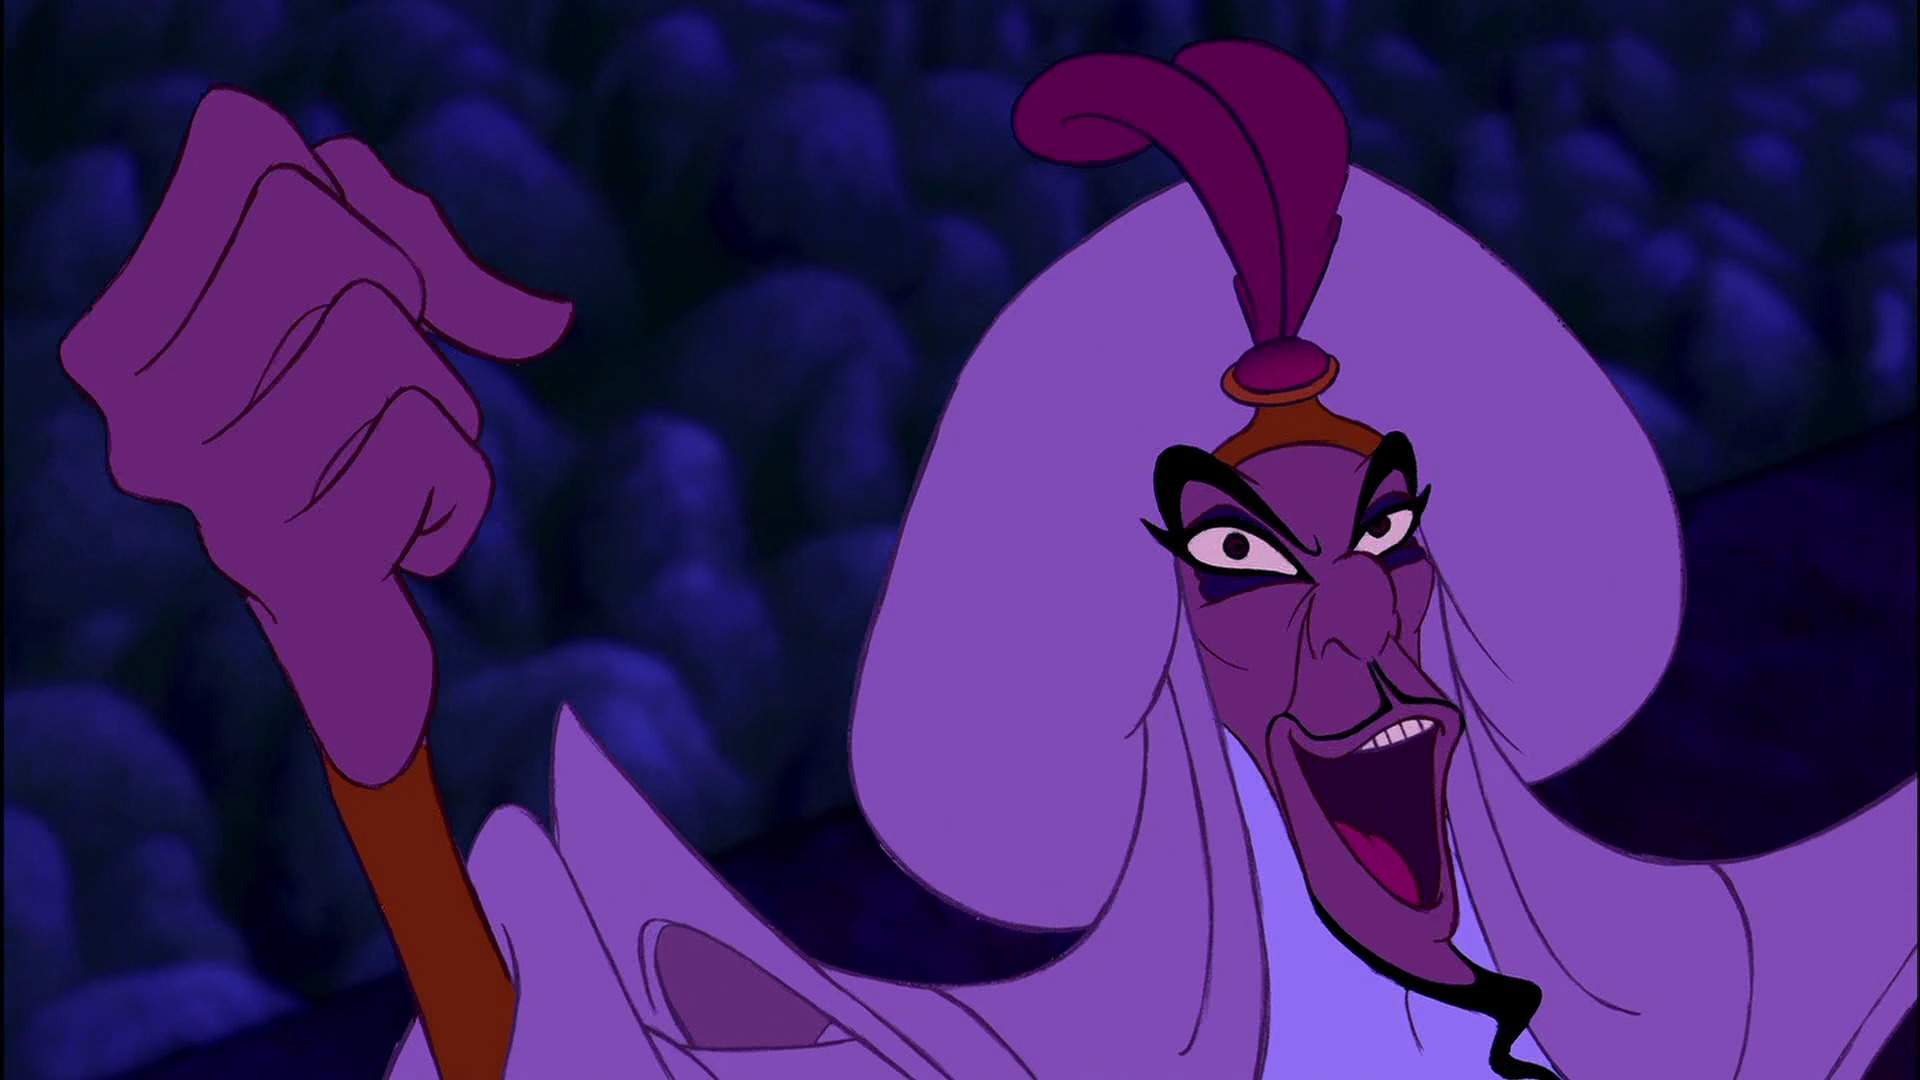 Sultan: "Jafar, you vile betrayer!" 